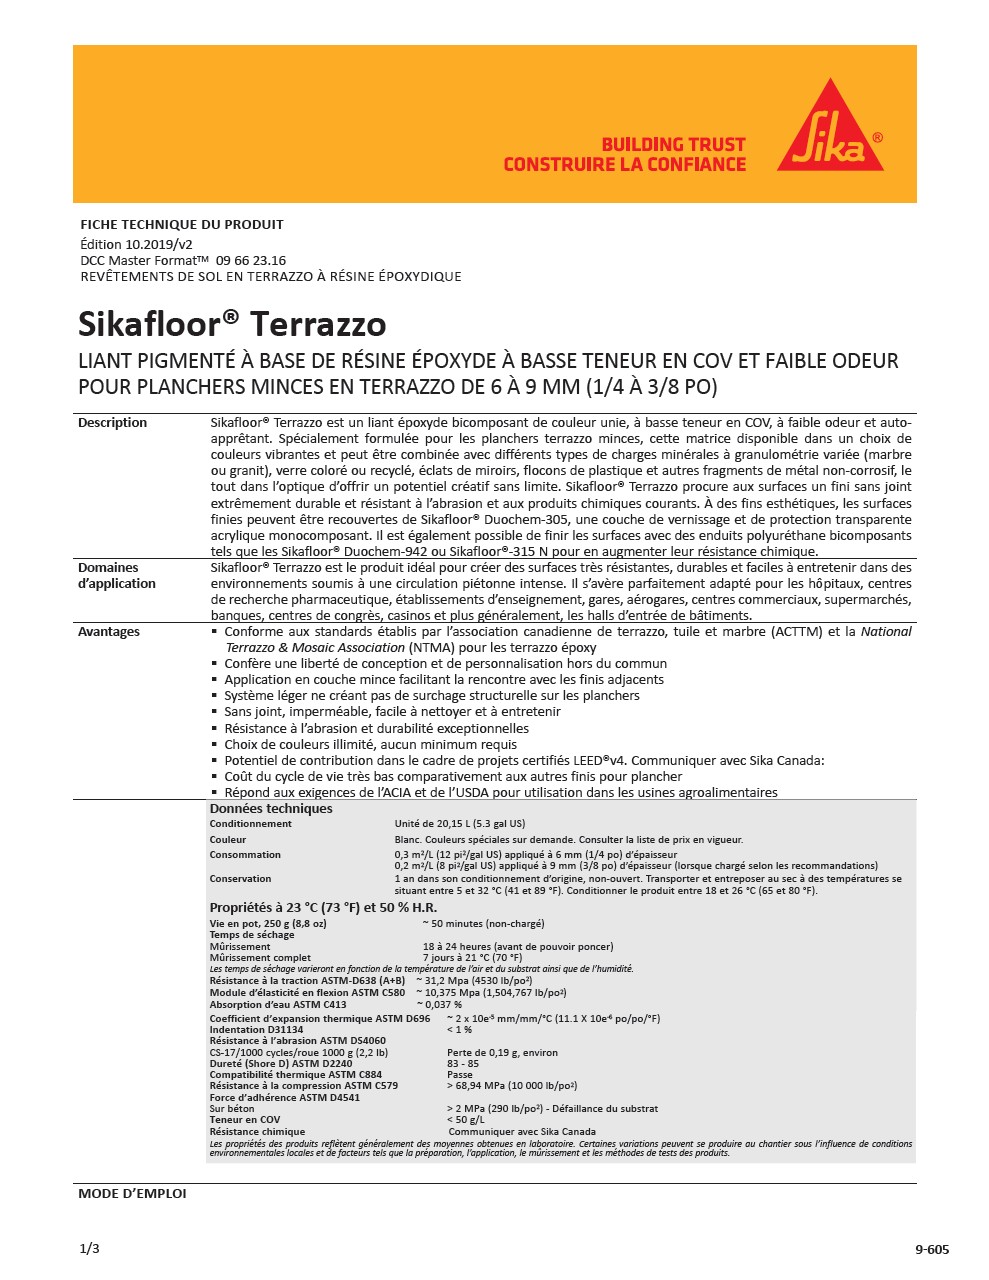 Sikafloor®- Terrazzo